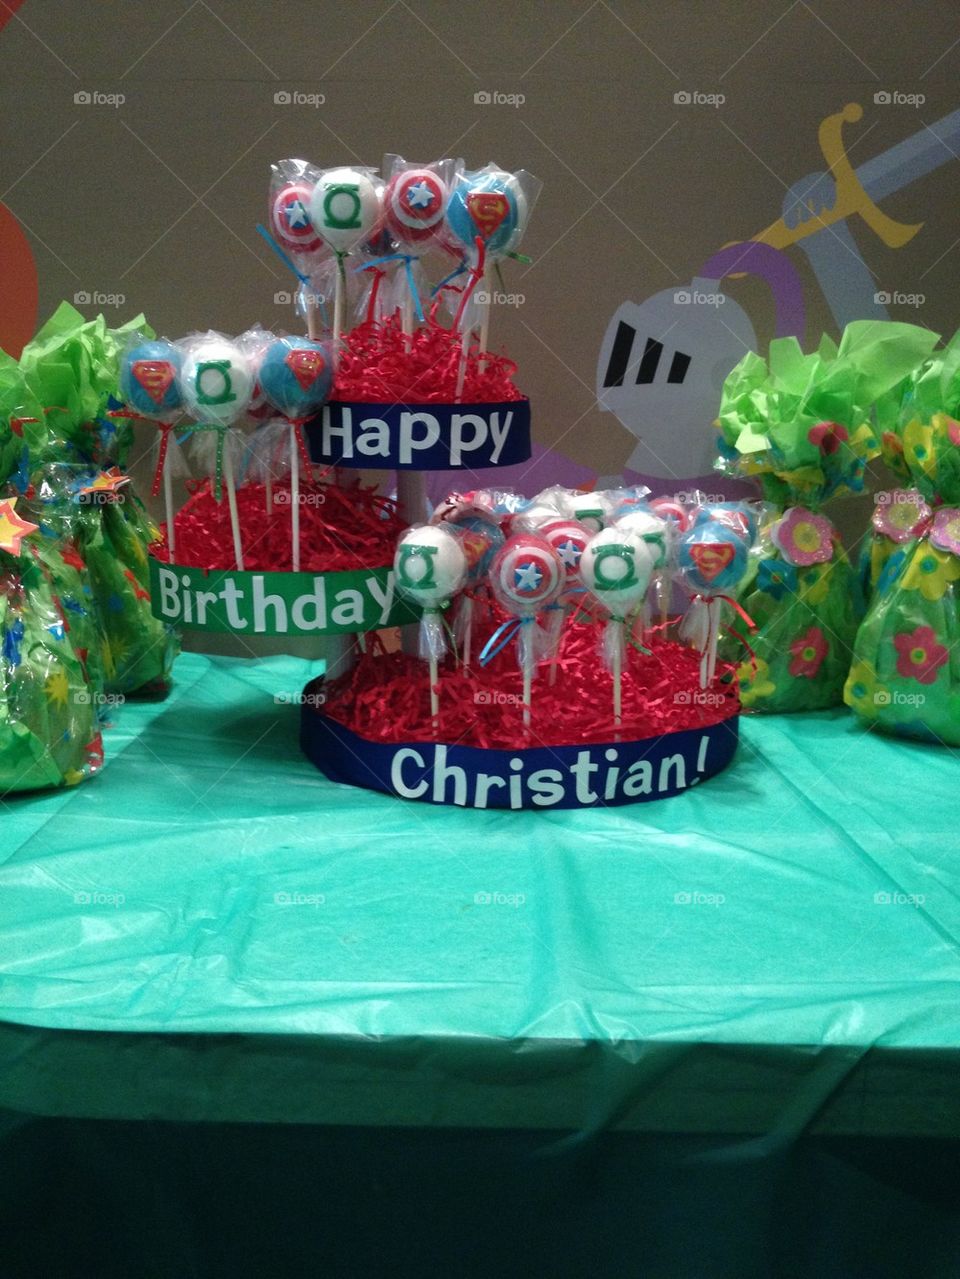 Cake pop birthday